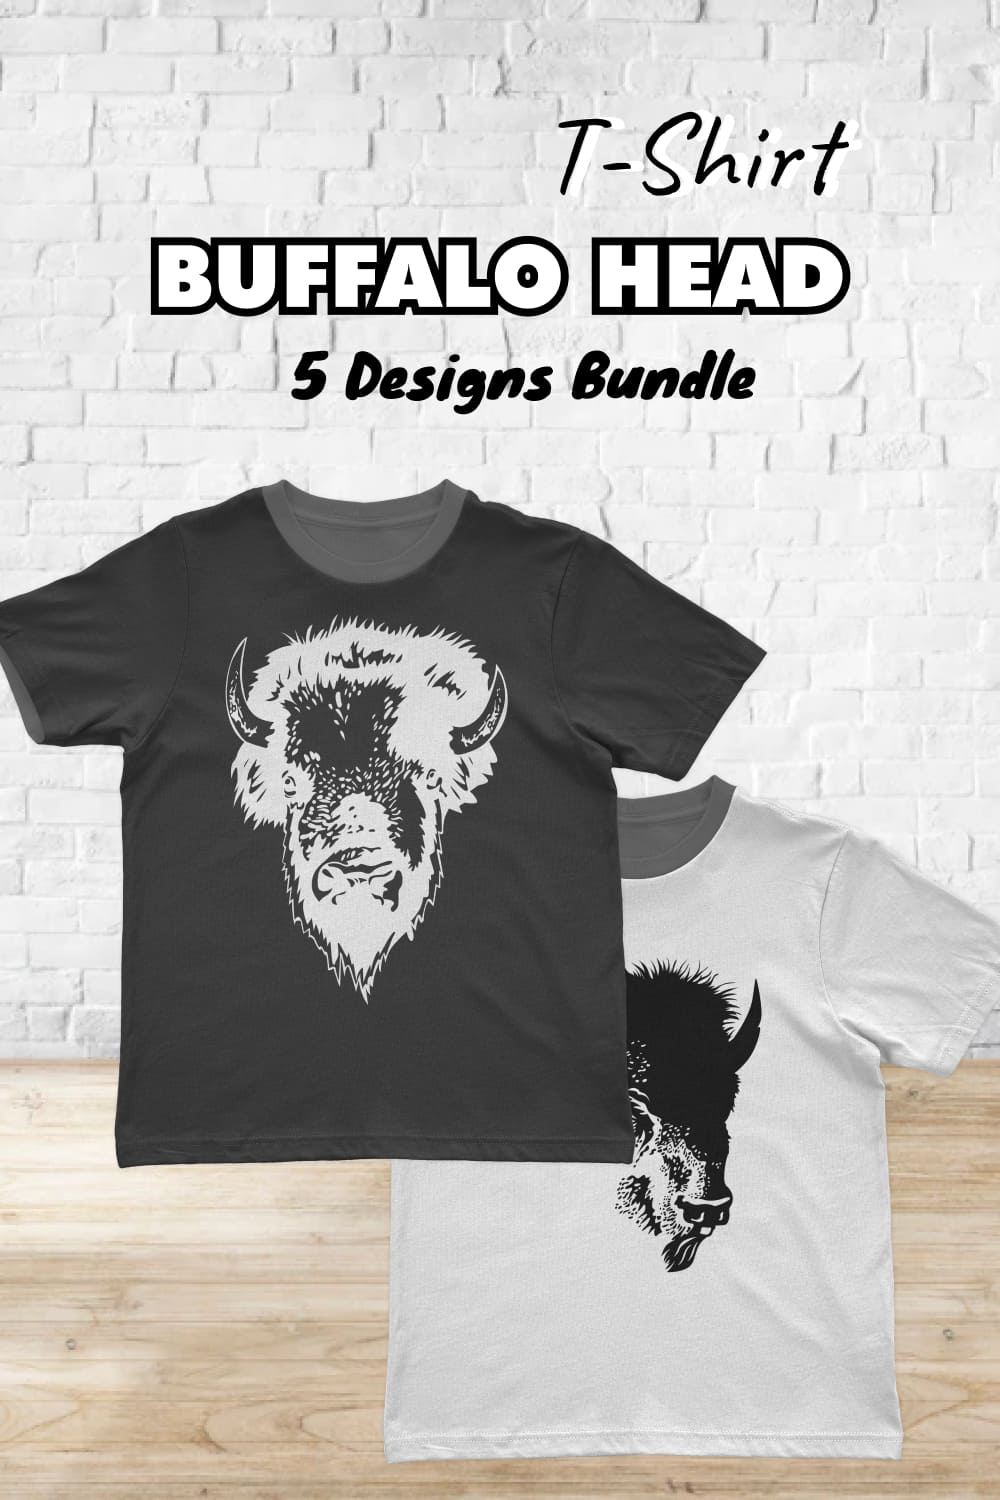 Buffalo head of pinterest.